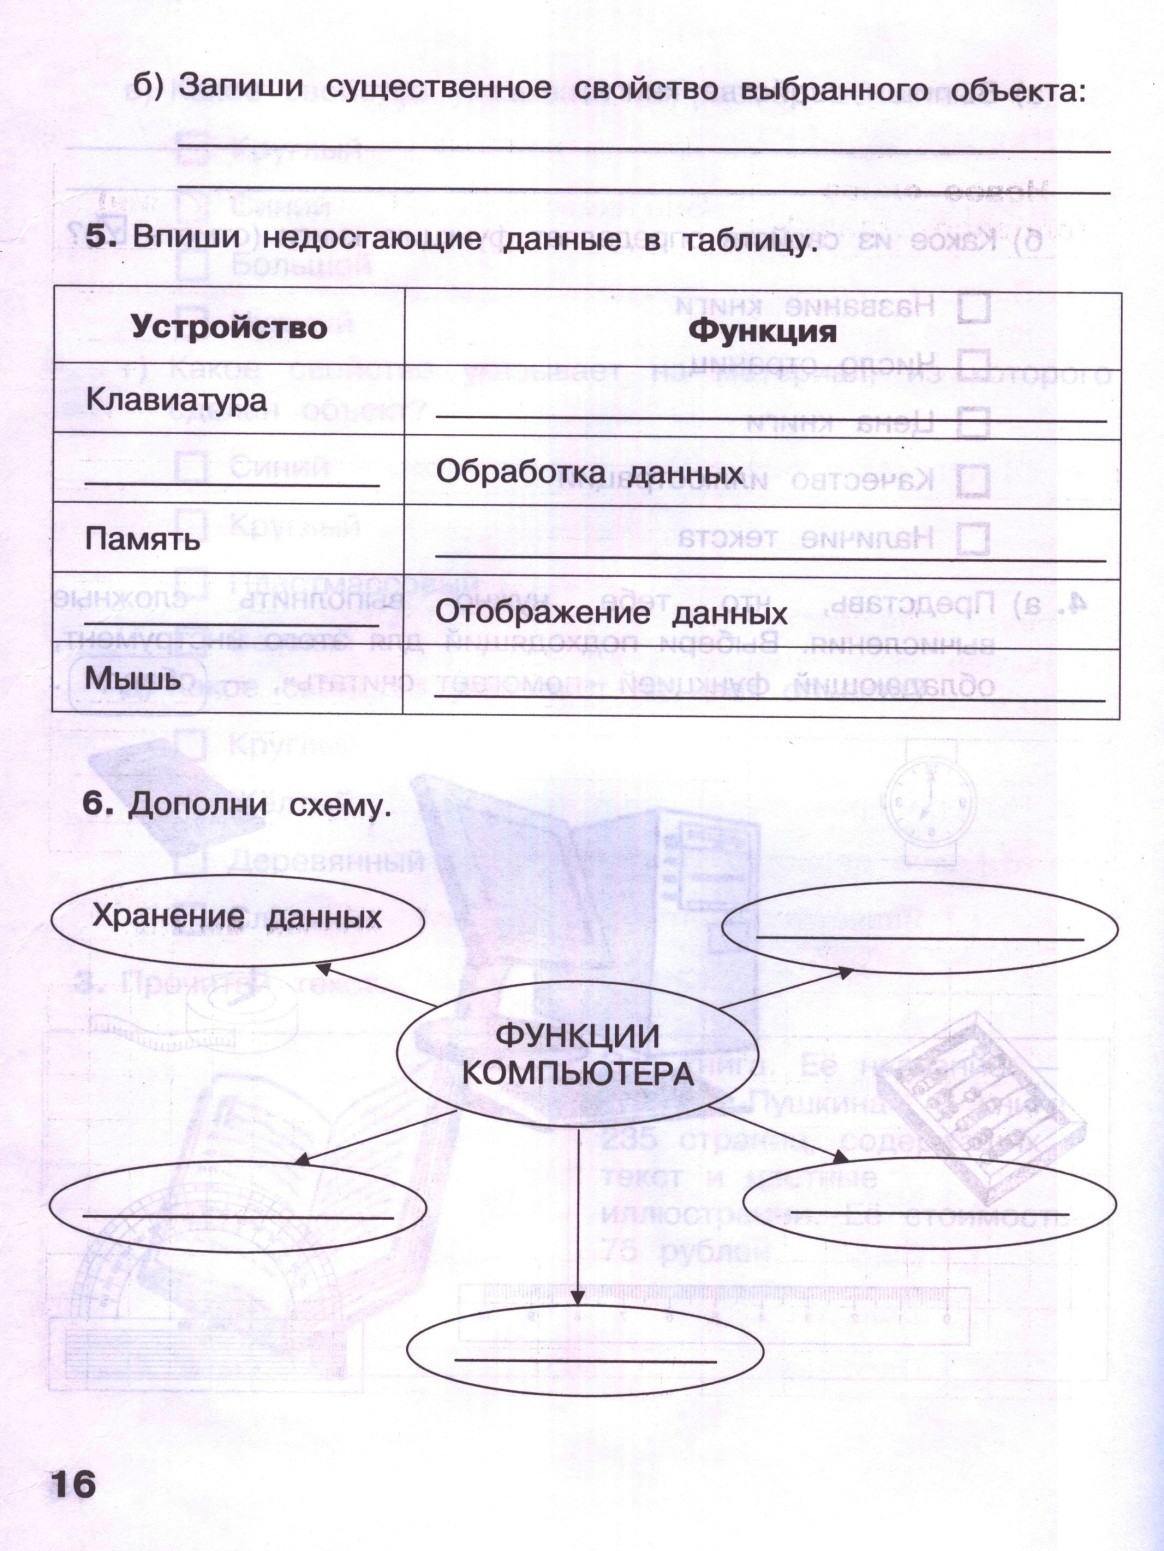 C:\Users\Irina Andreevna\AppData\Local\Microsoft\Windows\Temporary Internet Files\Content.Word\16.jpg